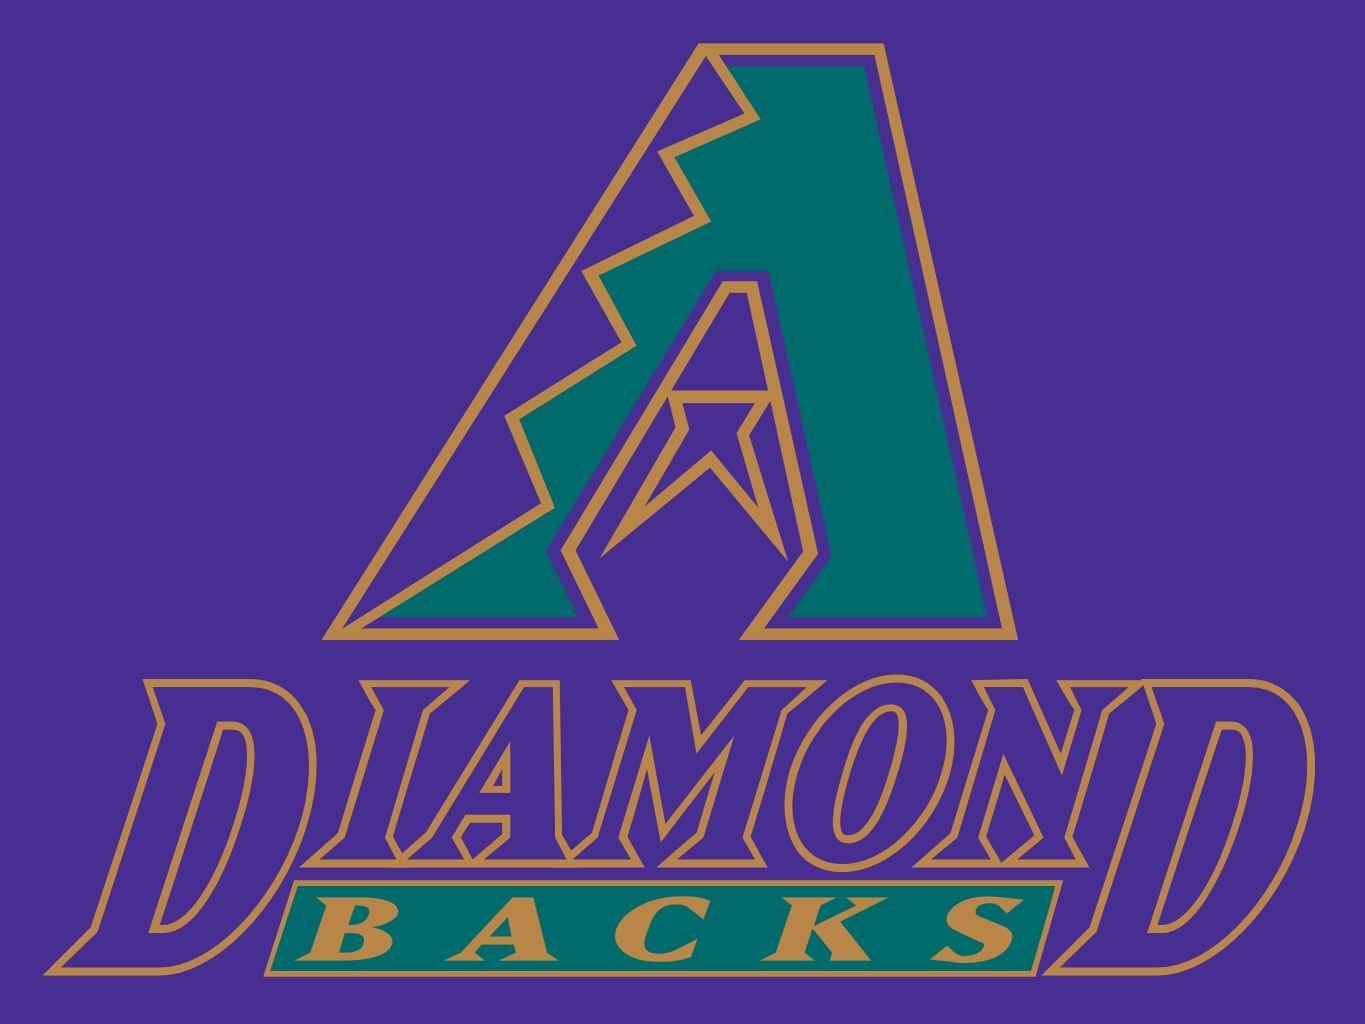 Arizona Diamondbacks Image